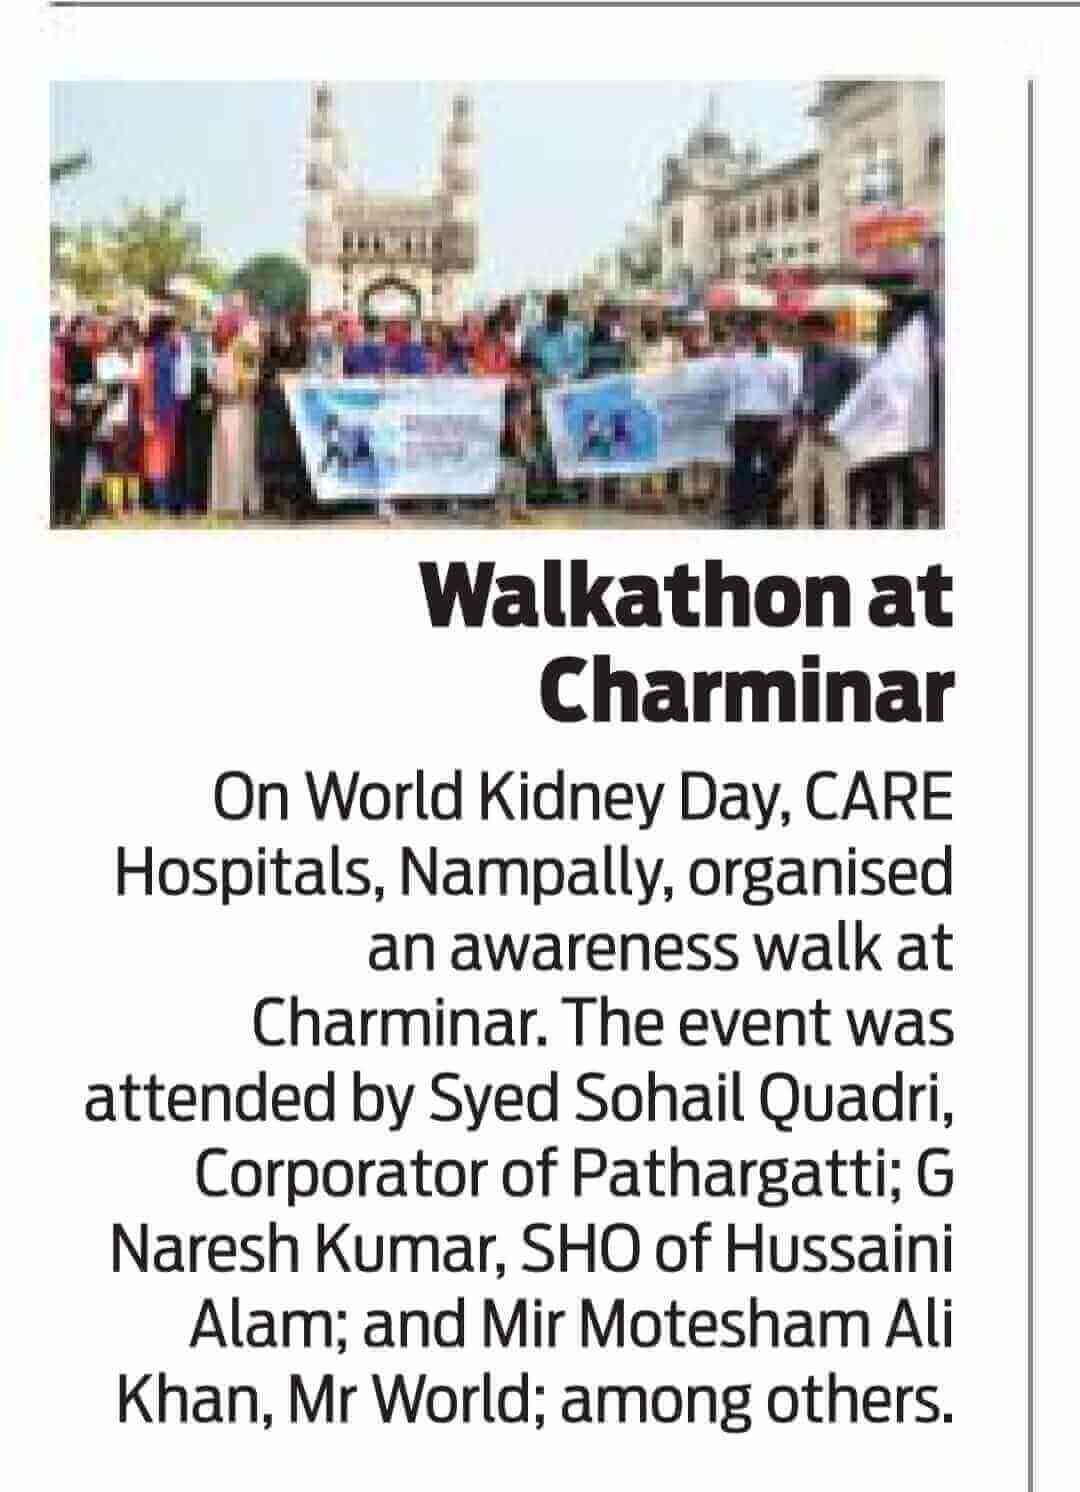 World Kidney Day Walkathon by CARE Hospitals, Nampally